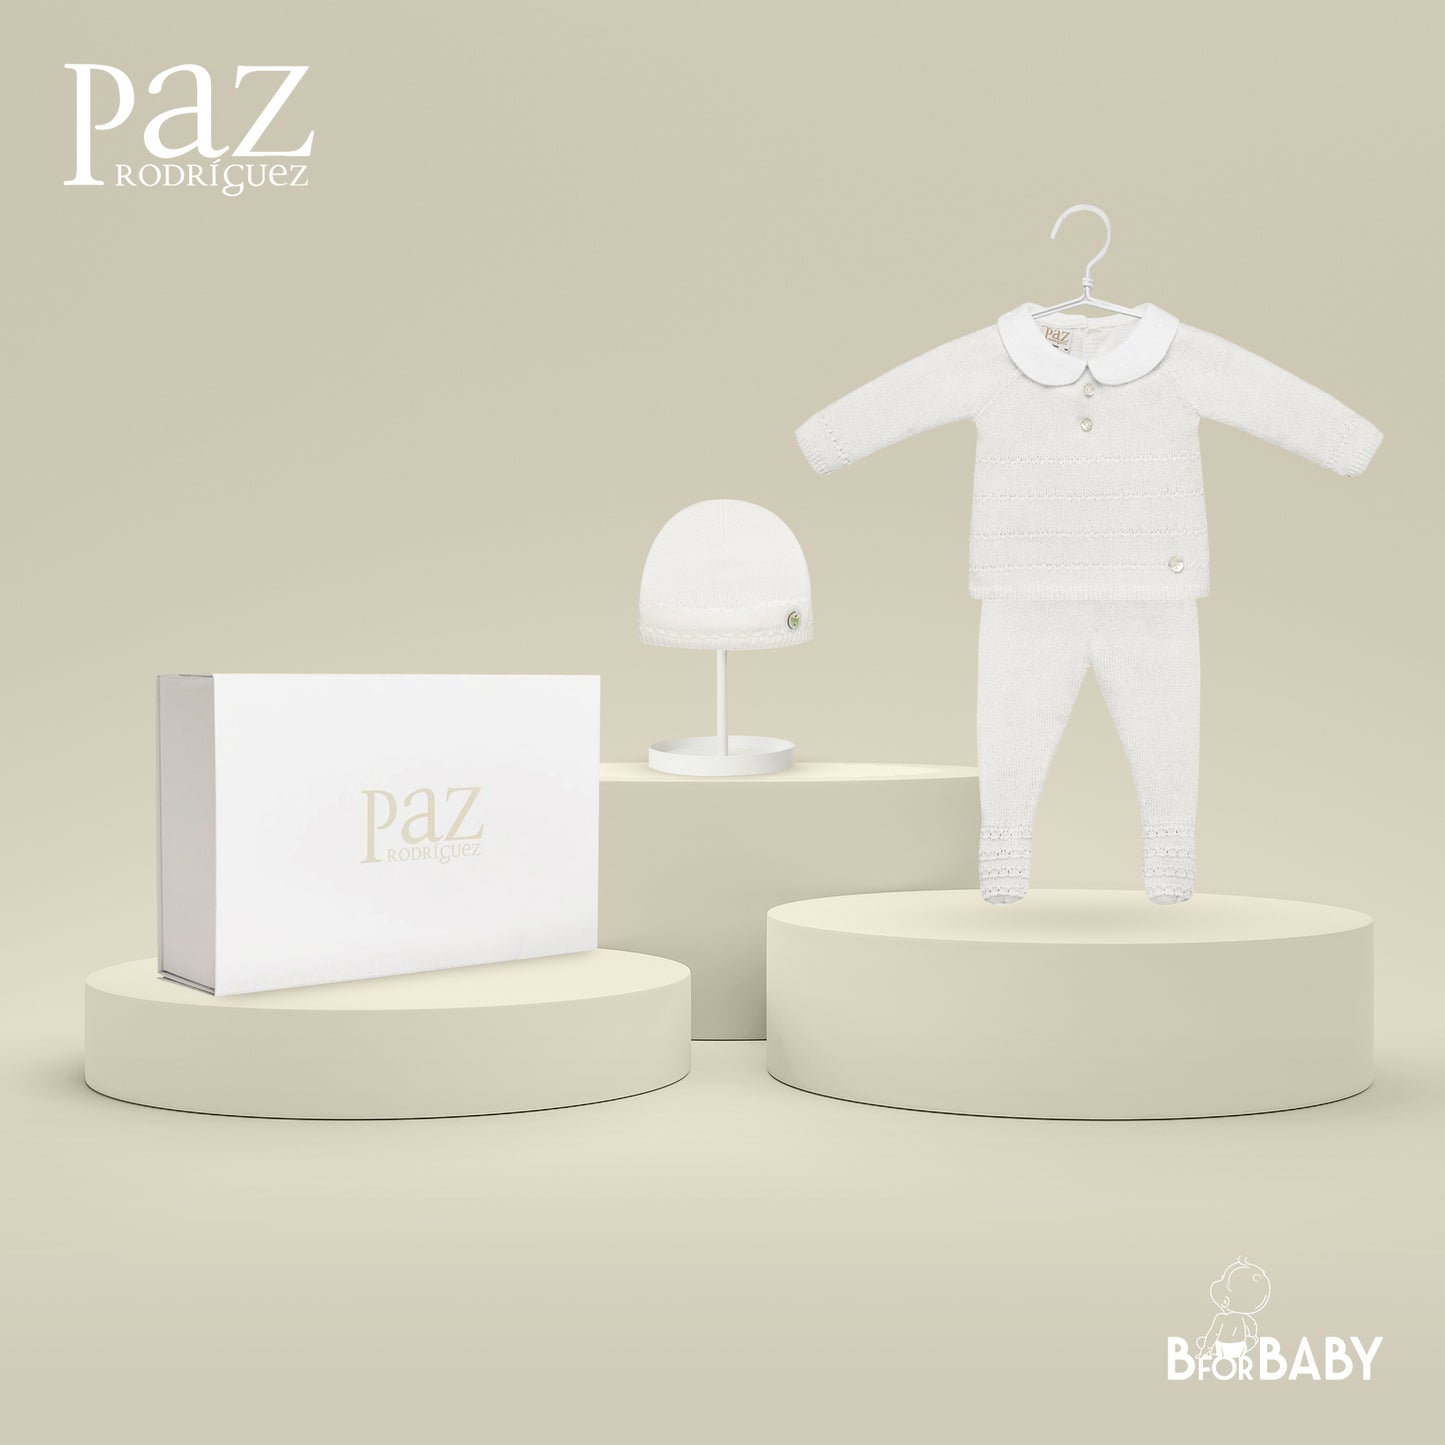 Paz Rodriguez 3-Piece (Pants, Sweater, Hat) Gift Set - Cream